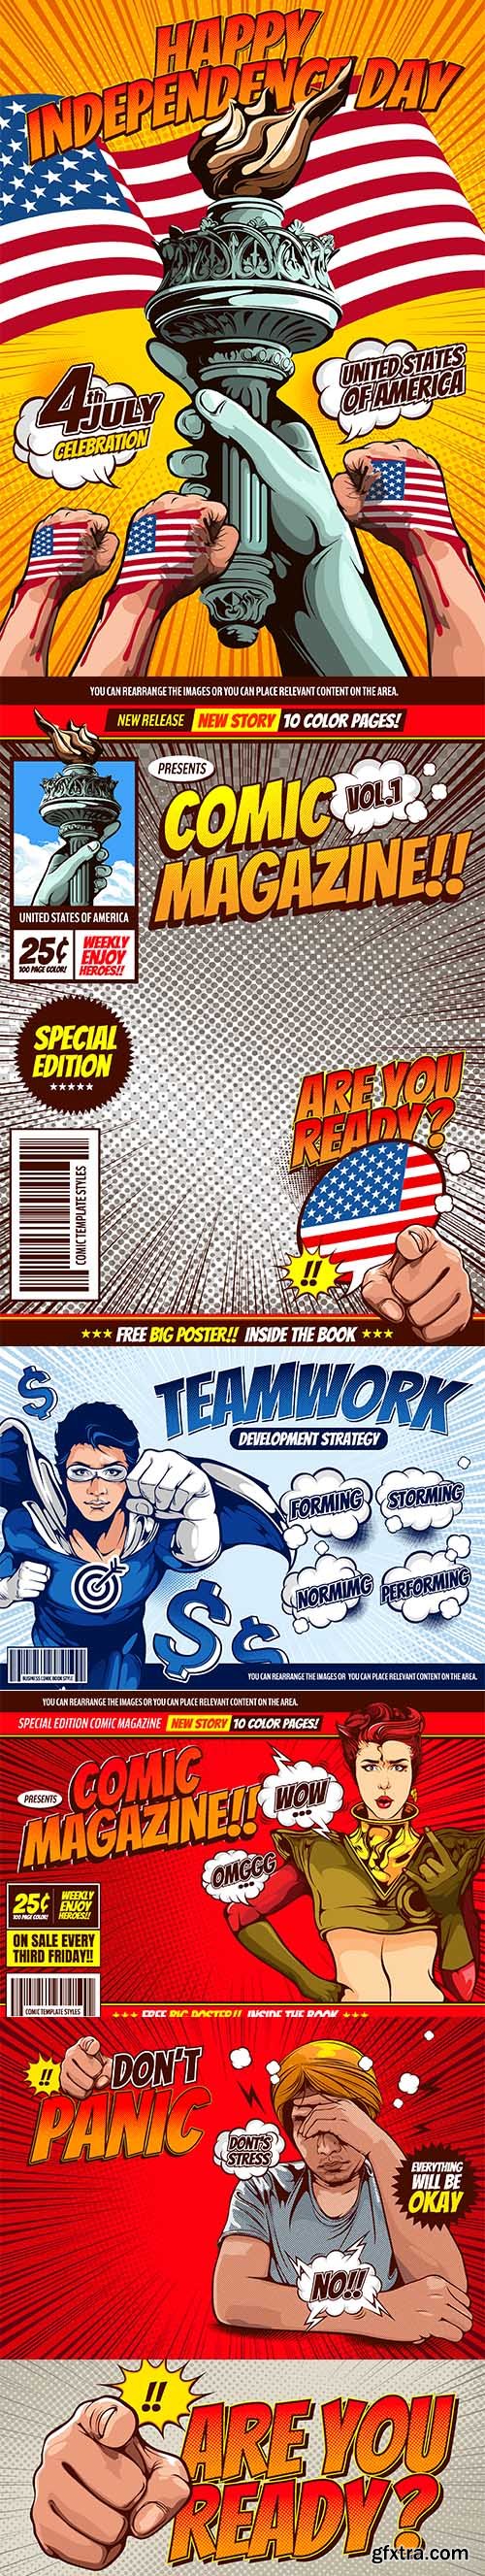 Comic book cover template